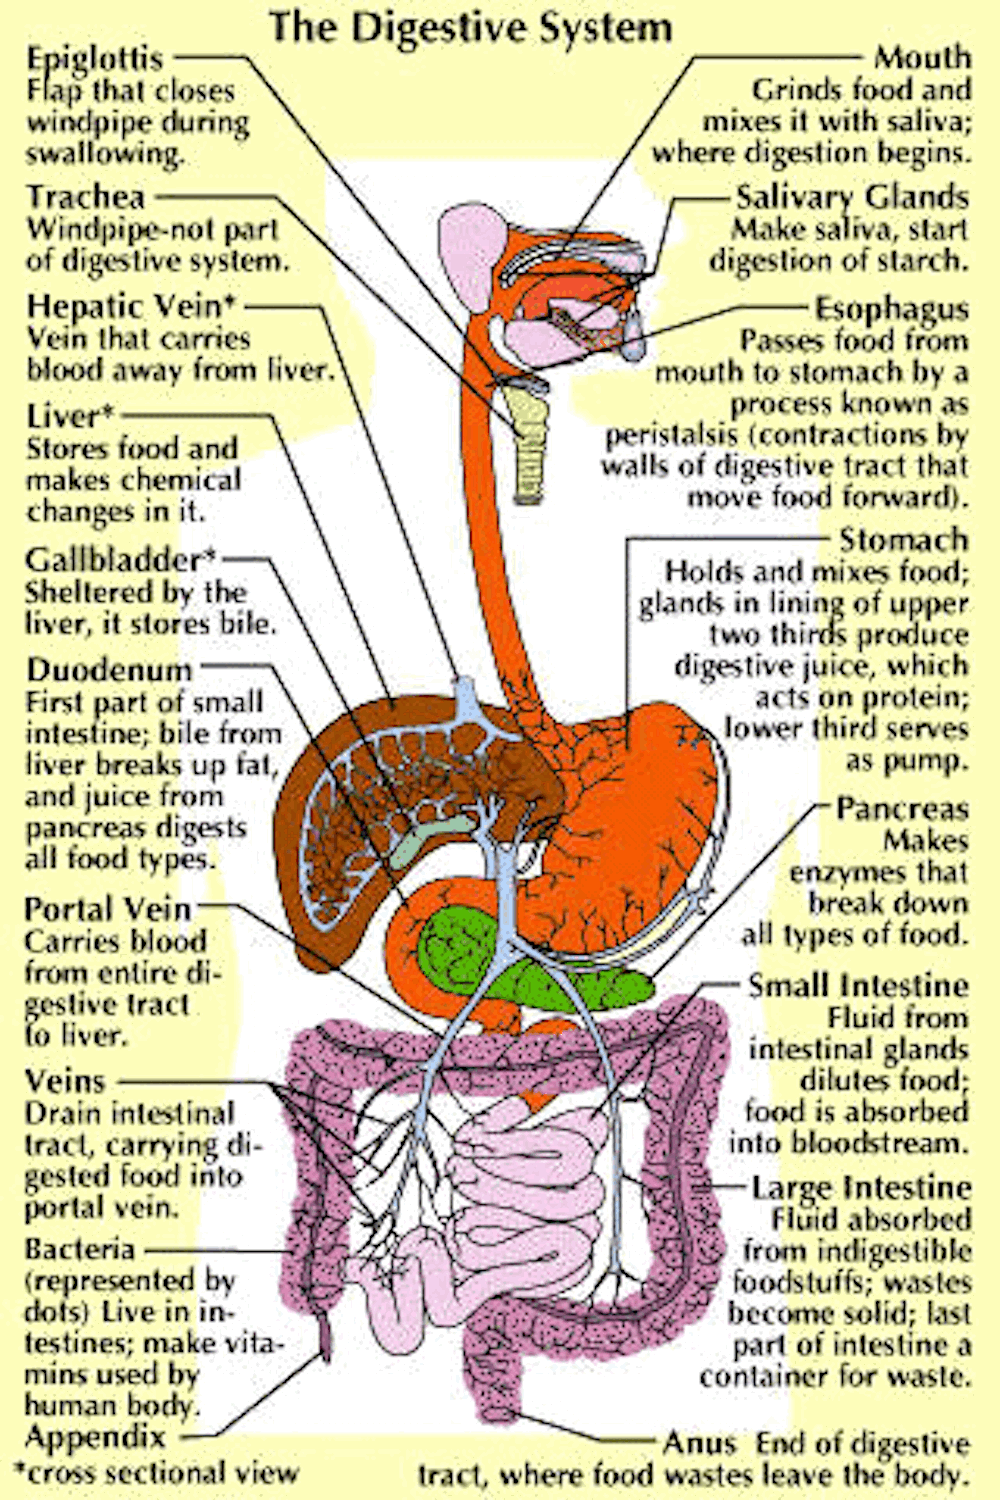 Digestive System Parts List